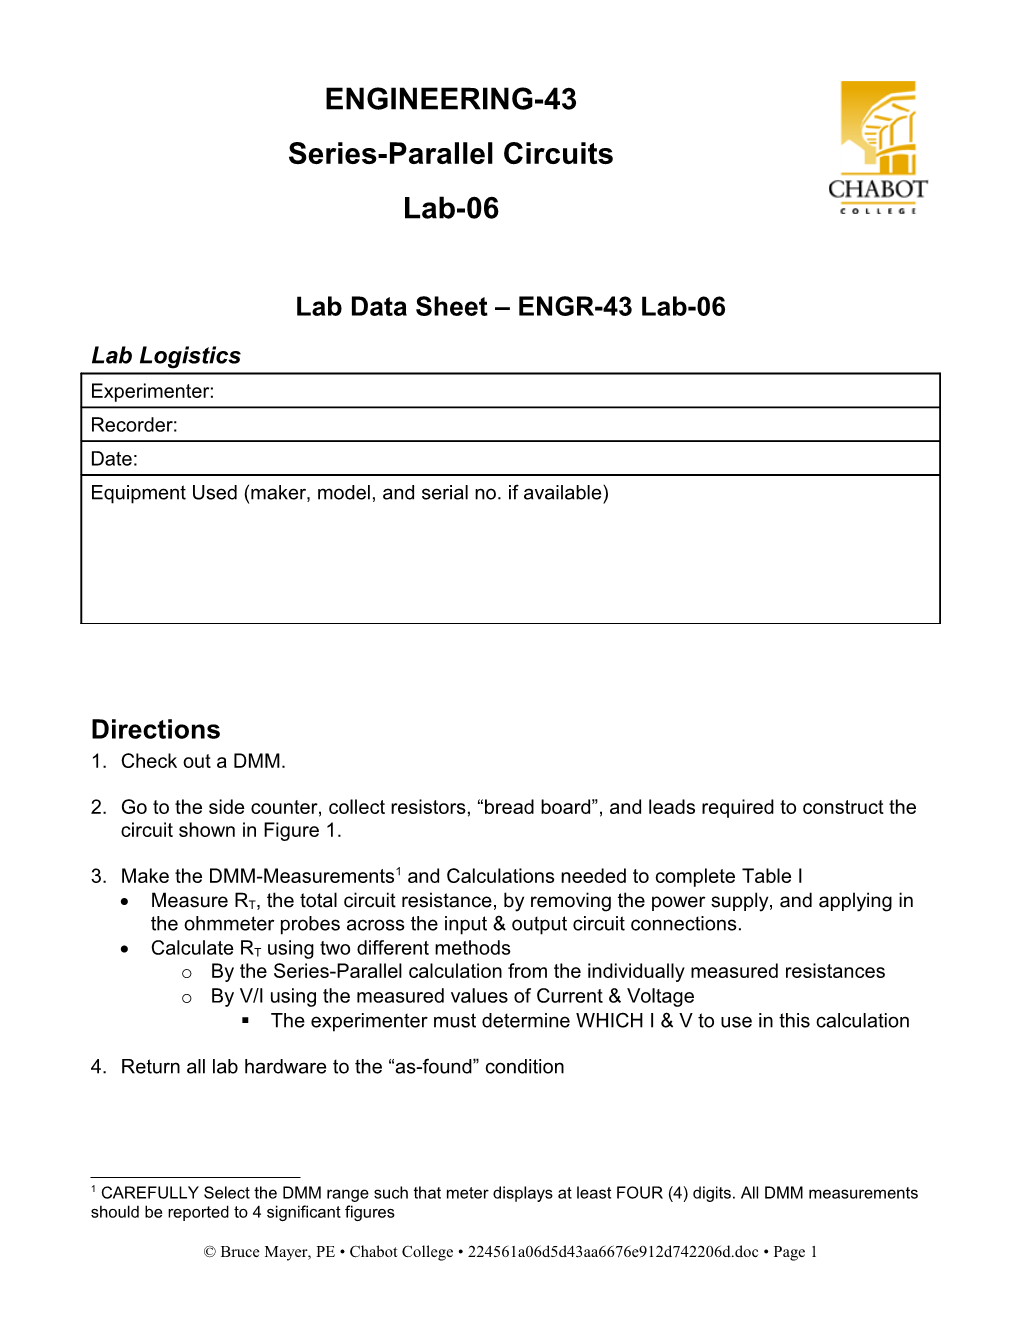 Lab Data Sheet ENGR-43 Lab-06